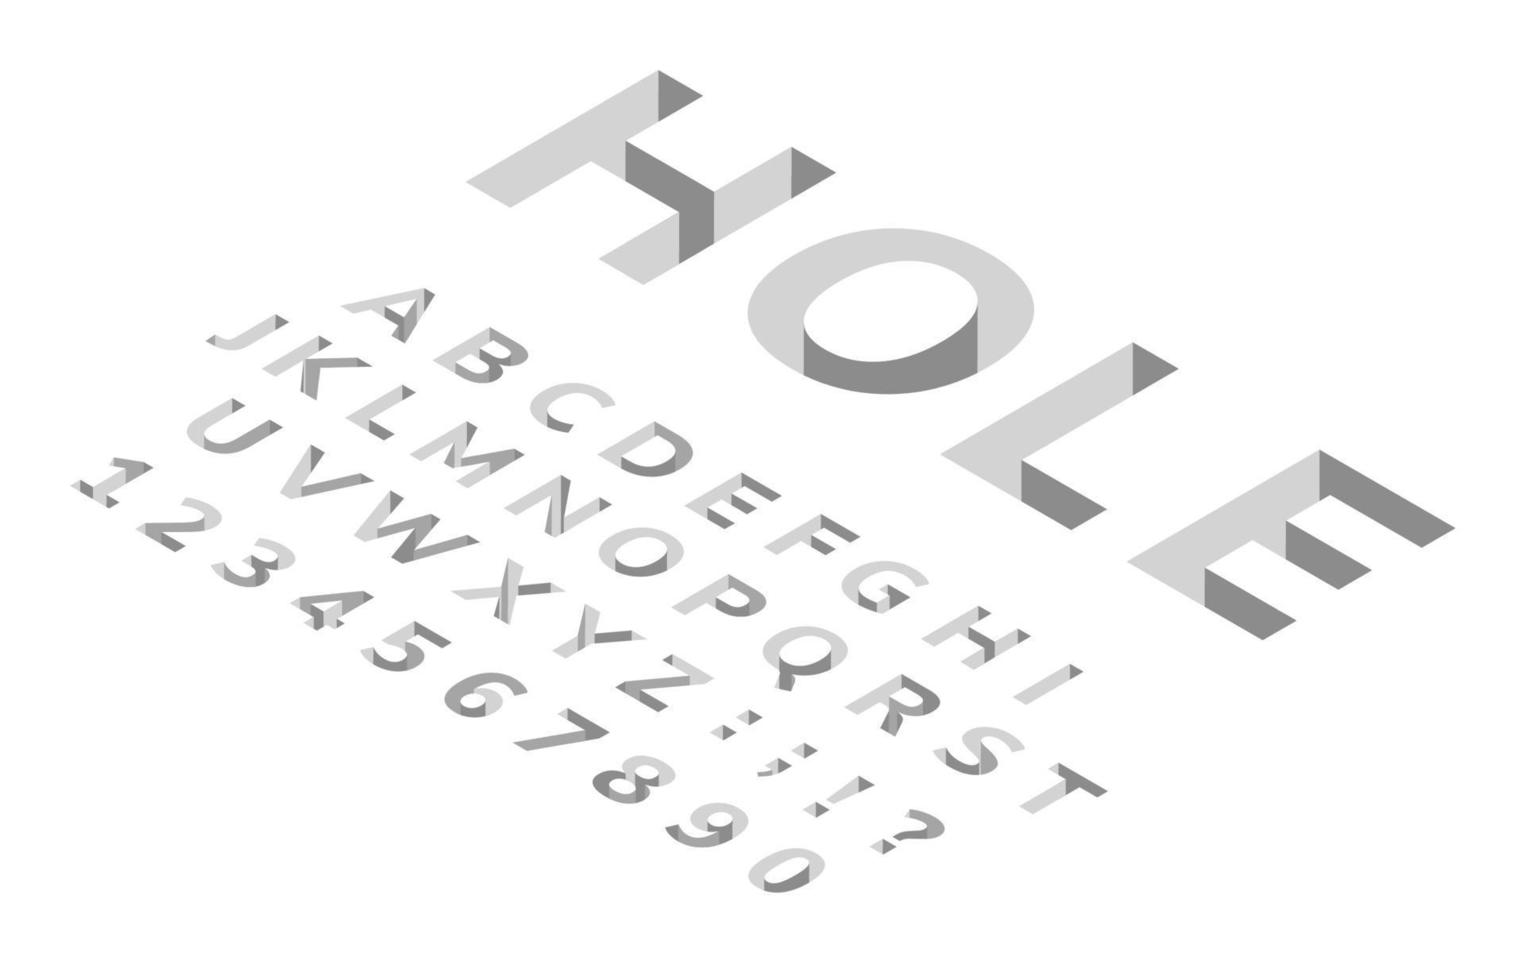 isometrisk hål font. 3d perspektiv alfabet, modern geometrisk kubisk typsnitt. djup hål i golv effekt brev, tal, symboler vektor uppsättning